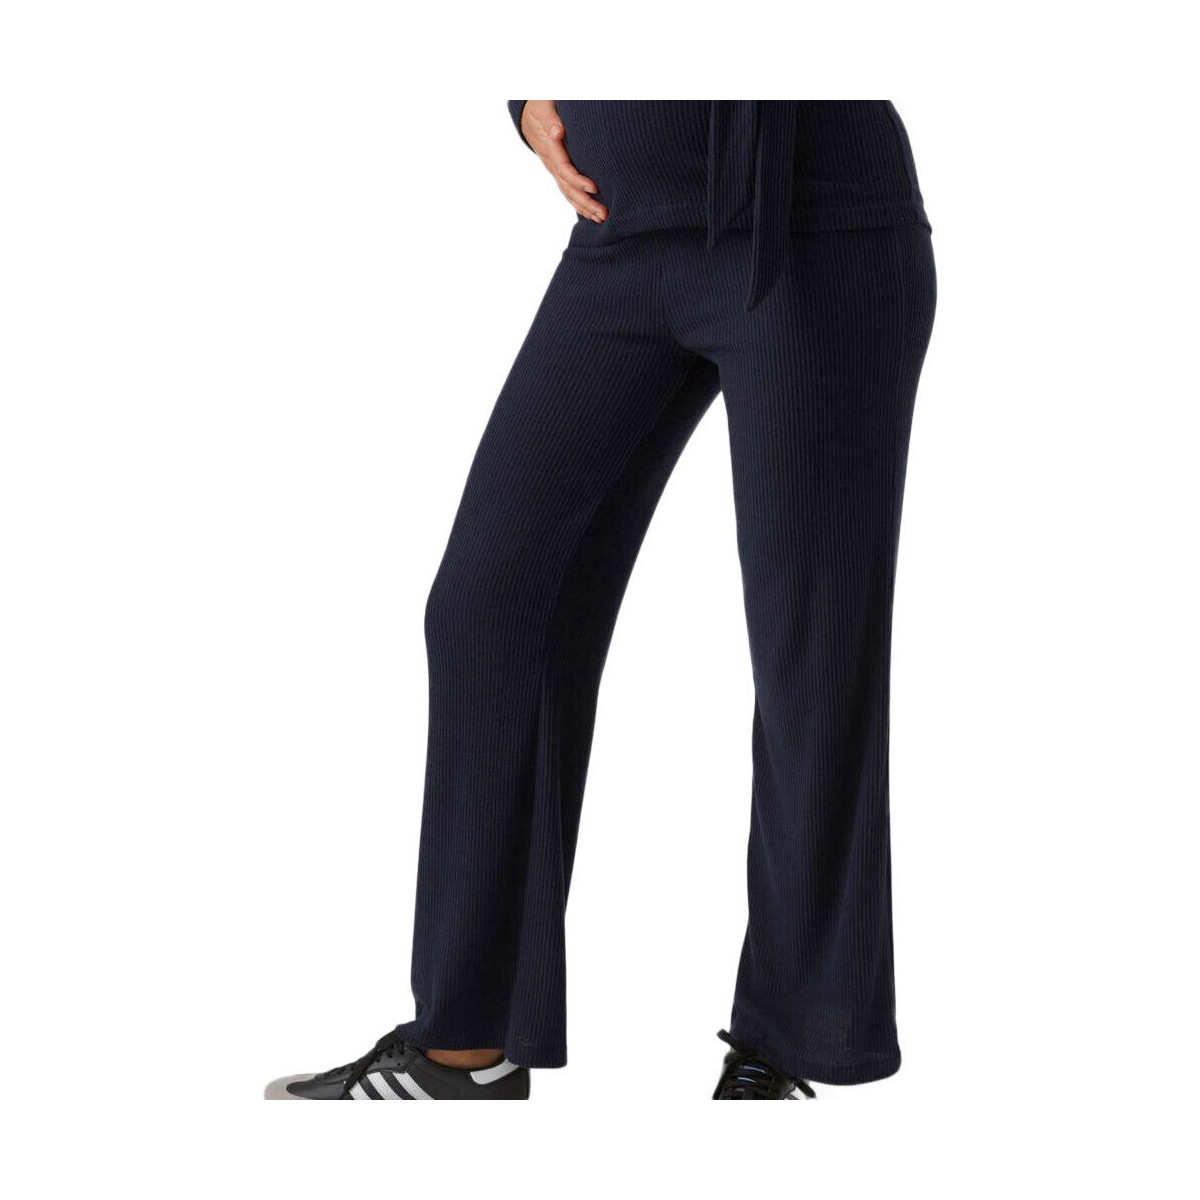 Textiel Dames Broeken / Pantalons Mamalicious  Blauw